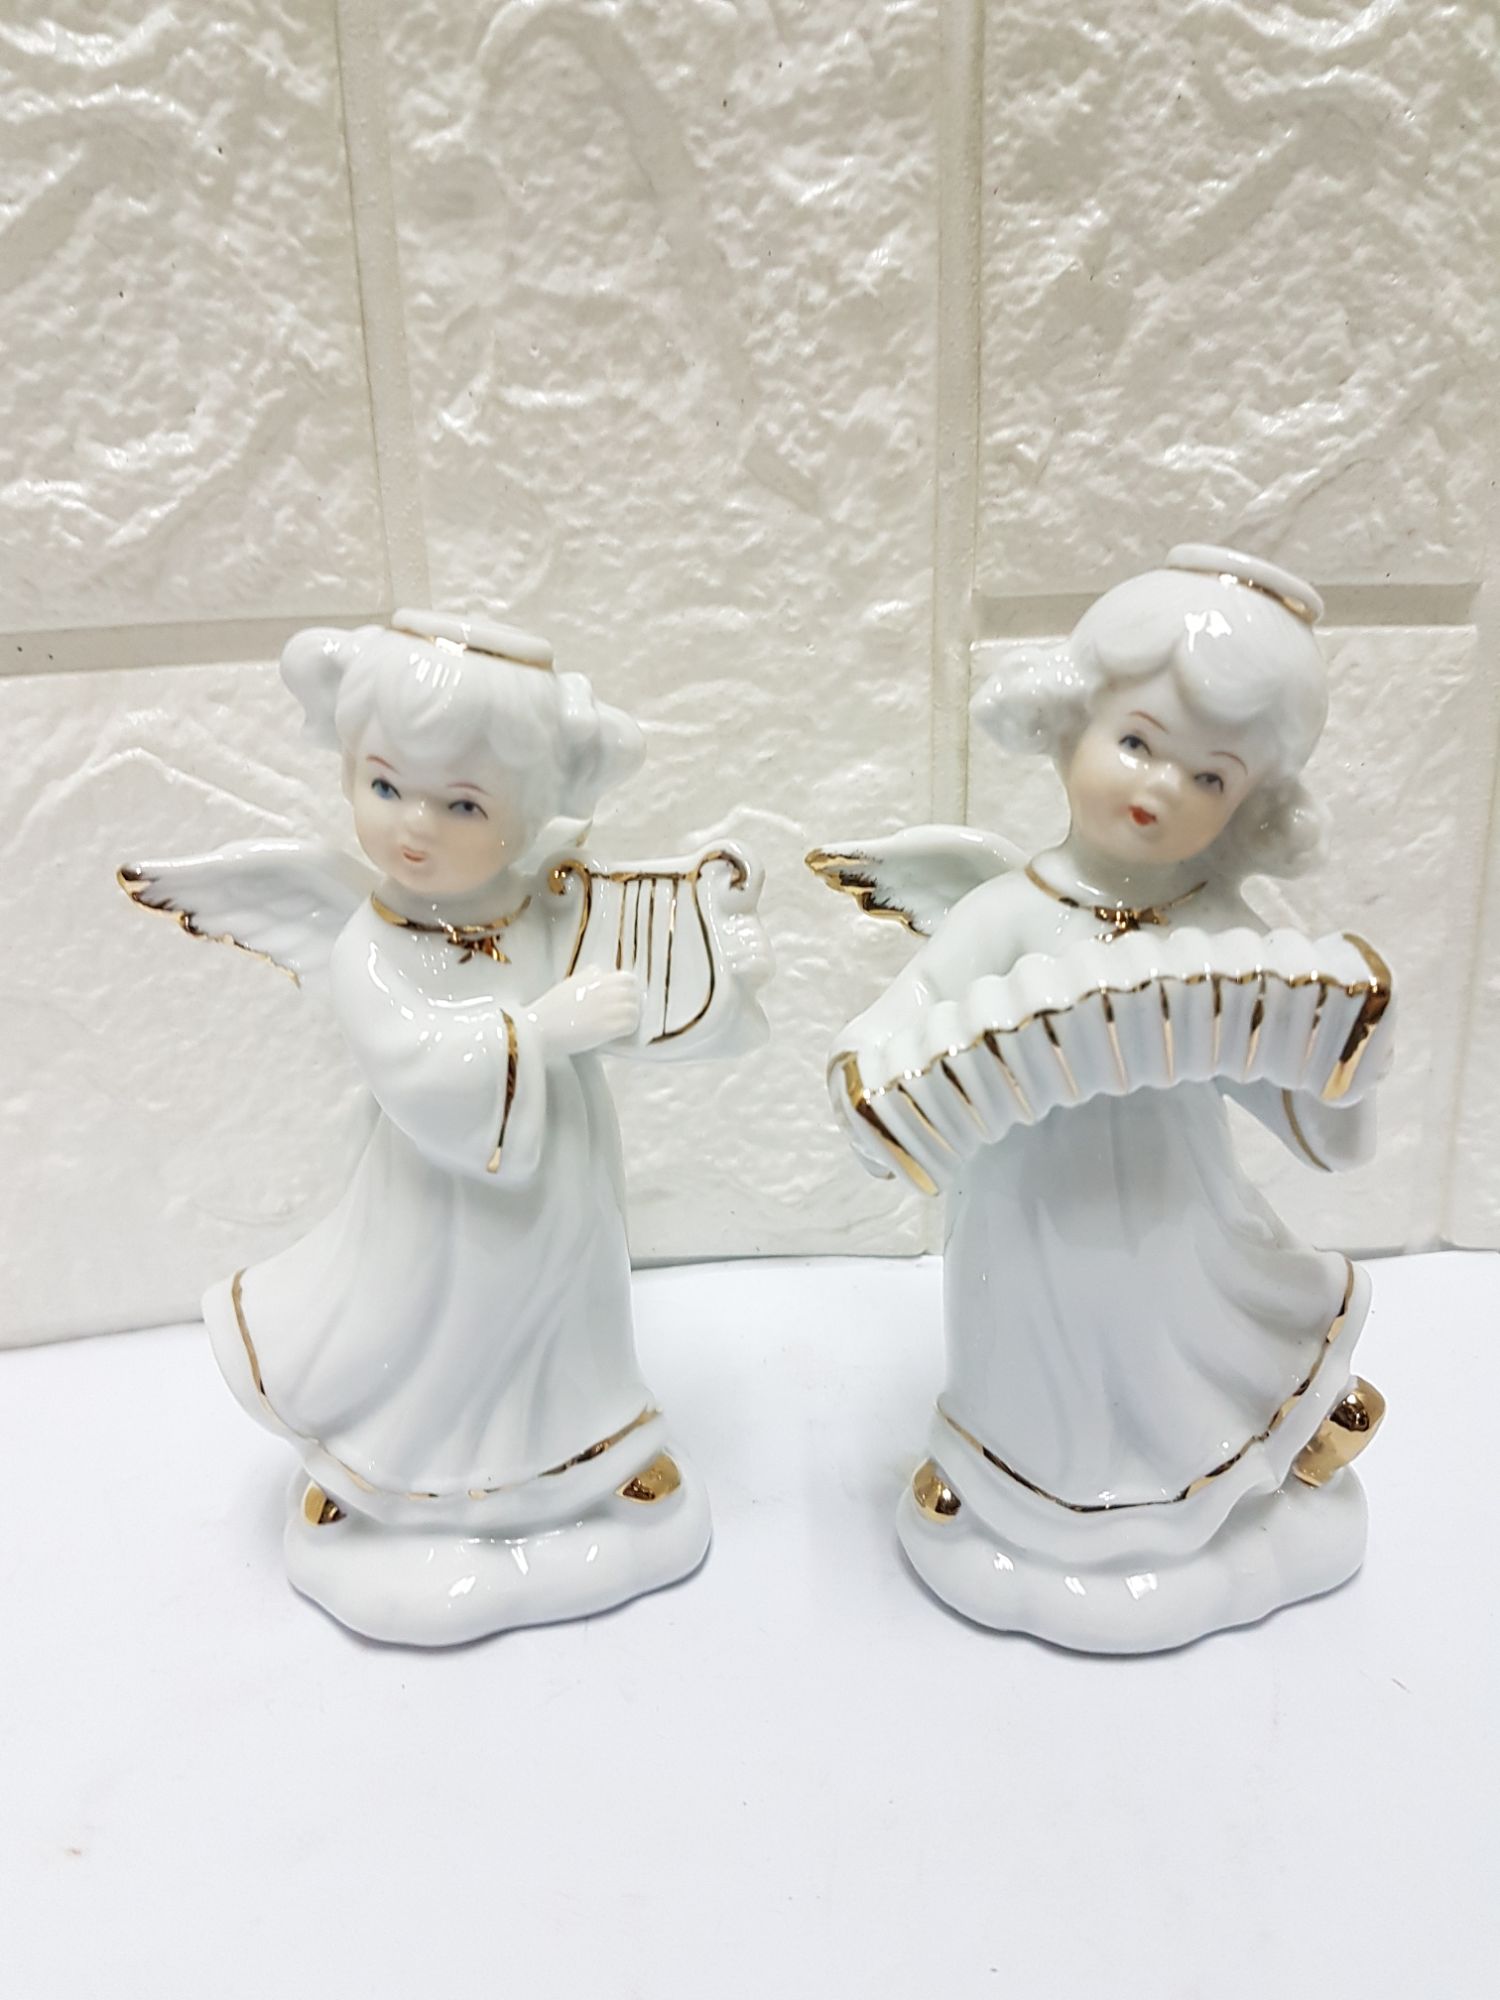 Vintage Porcelain Angel Figurine Holding A Dove Angel Wings